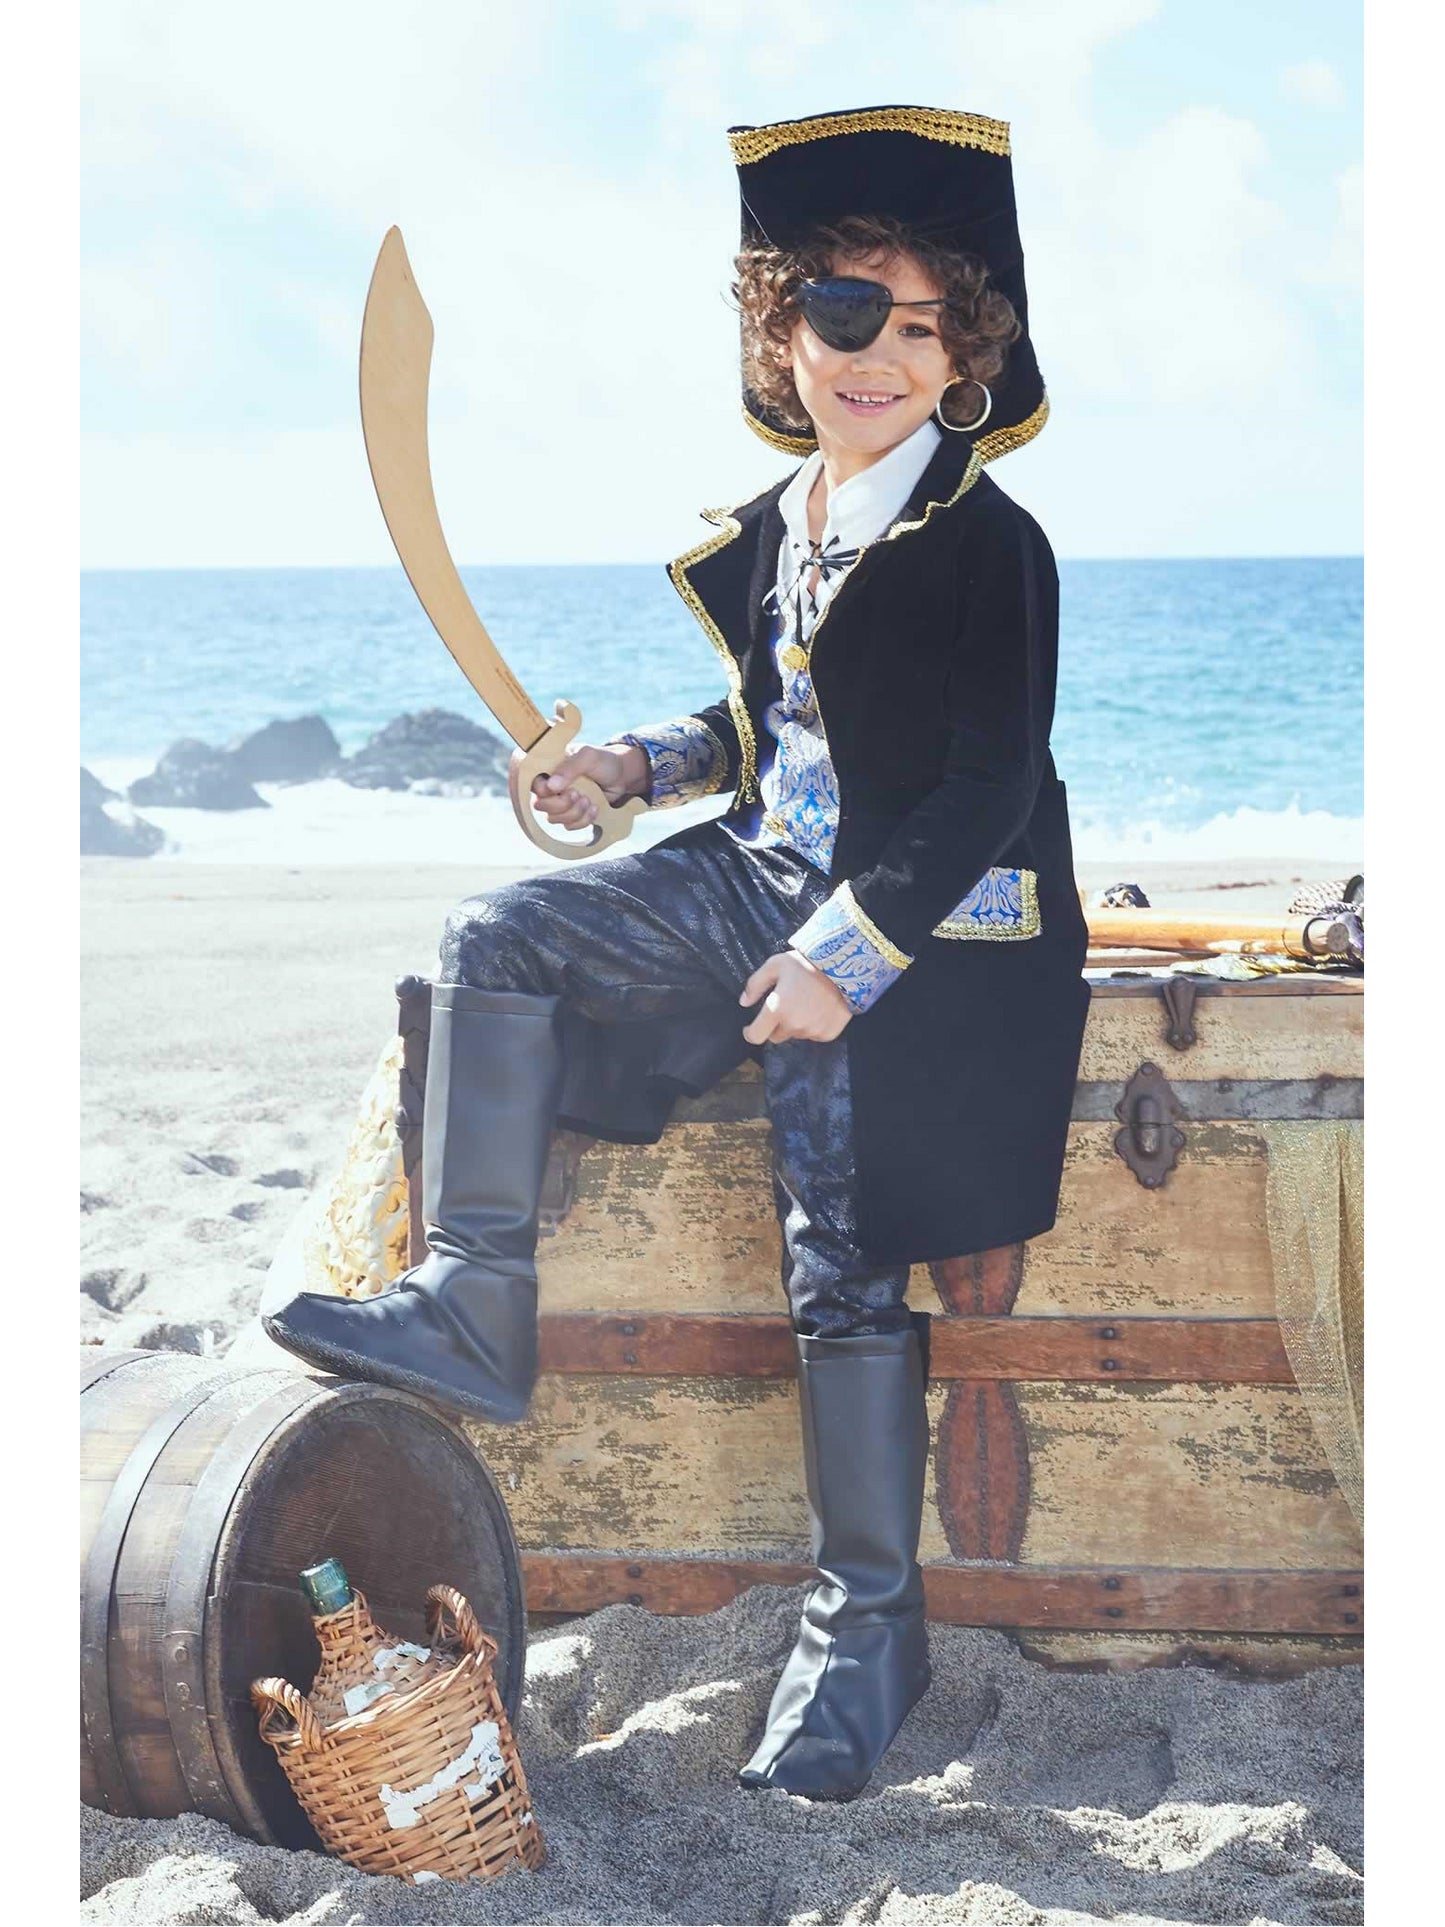 Blue Brocade Pirate Costume for Boys